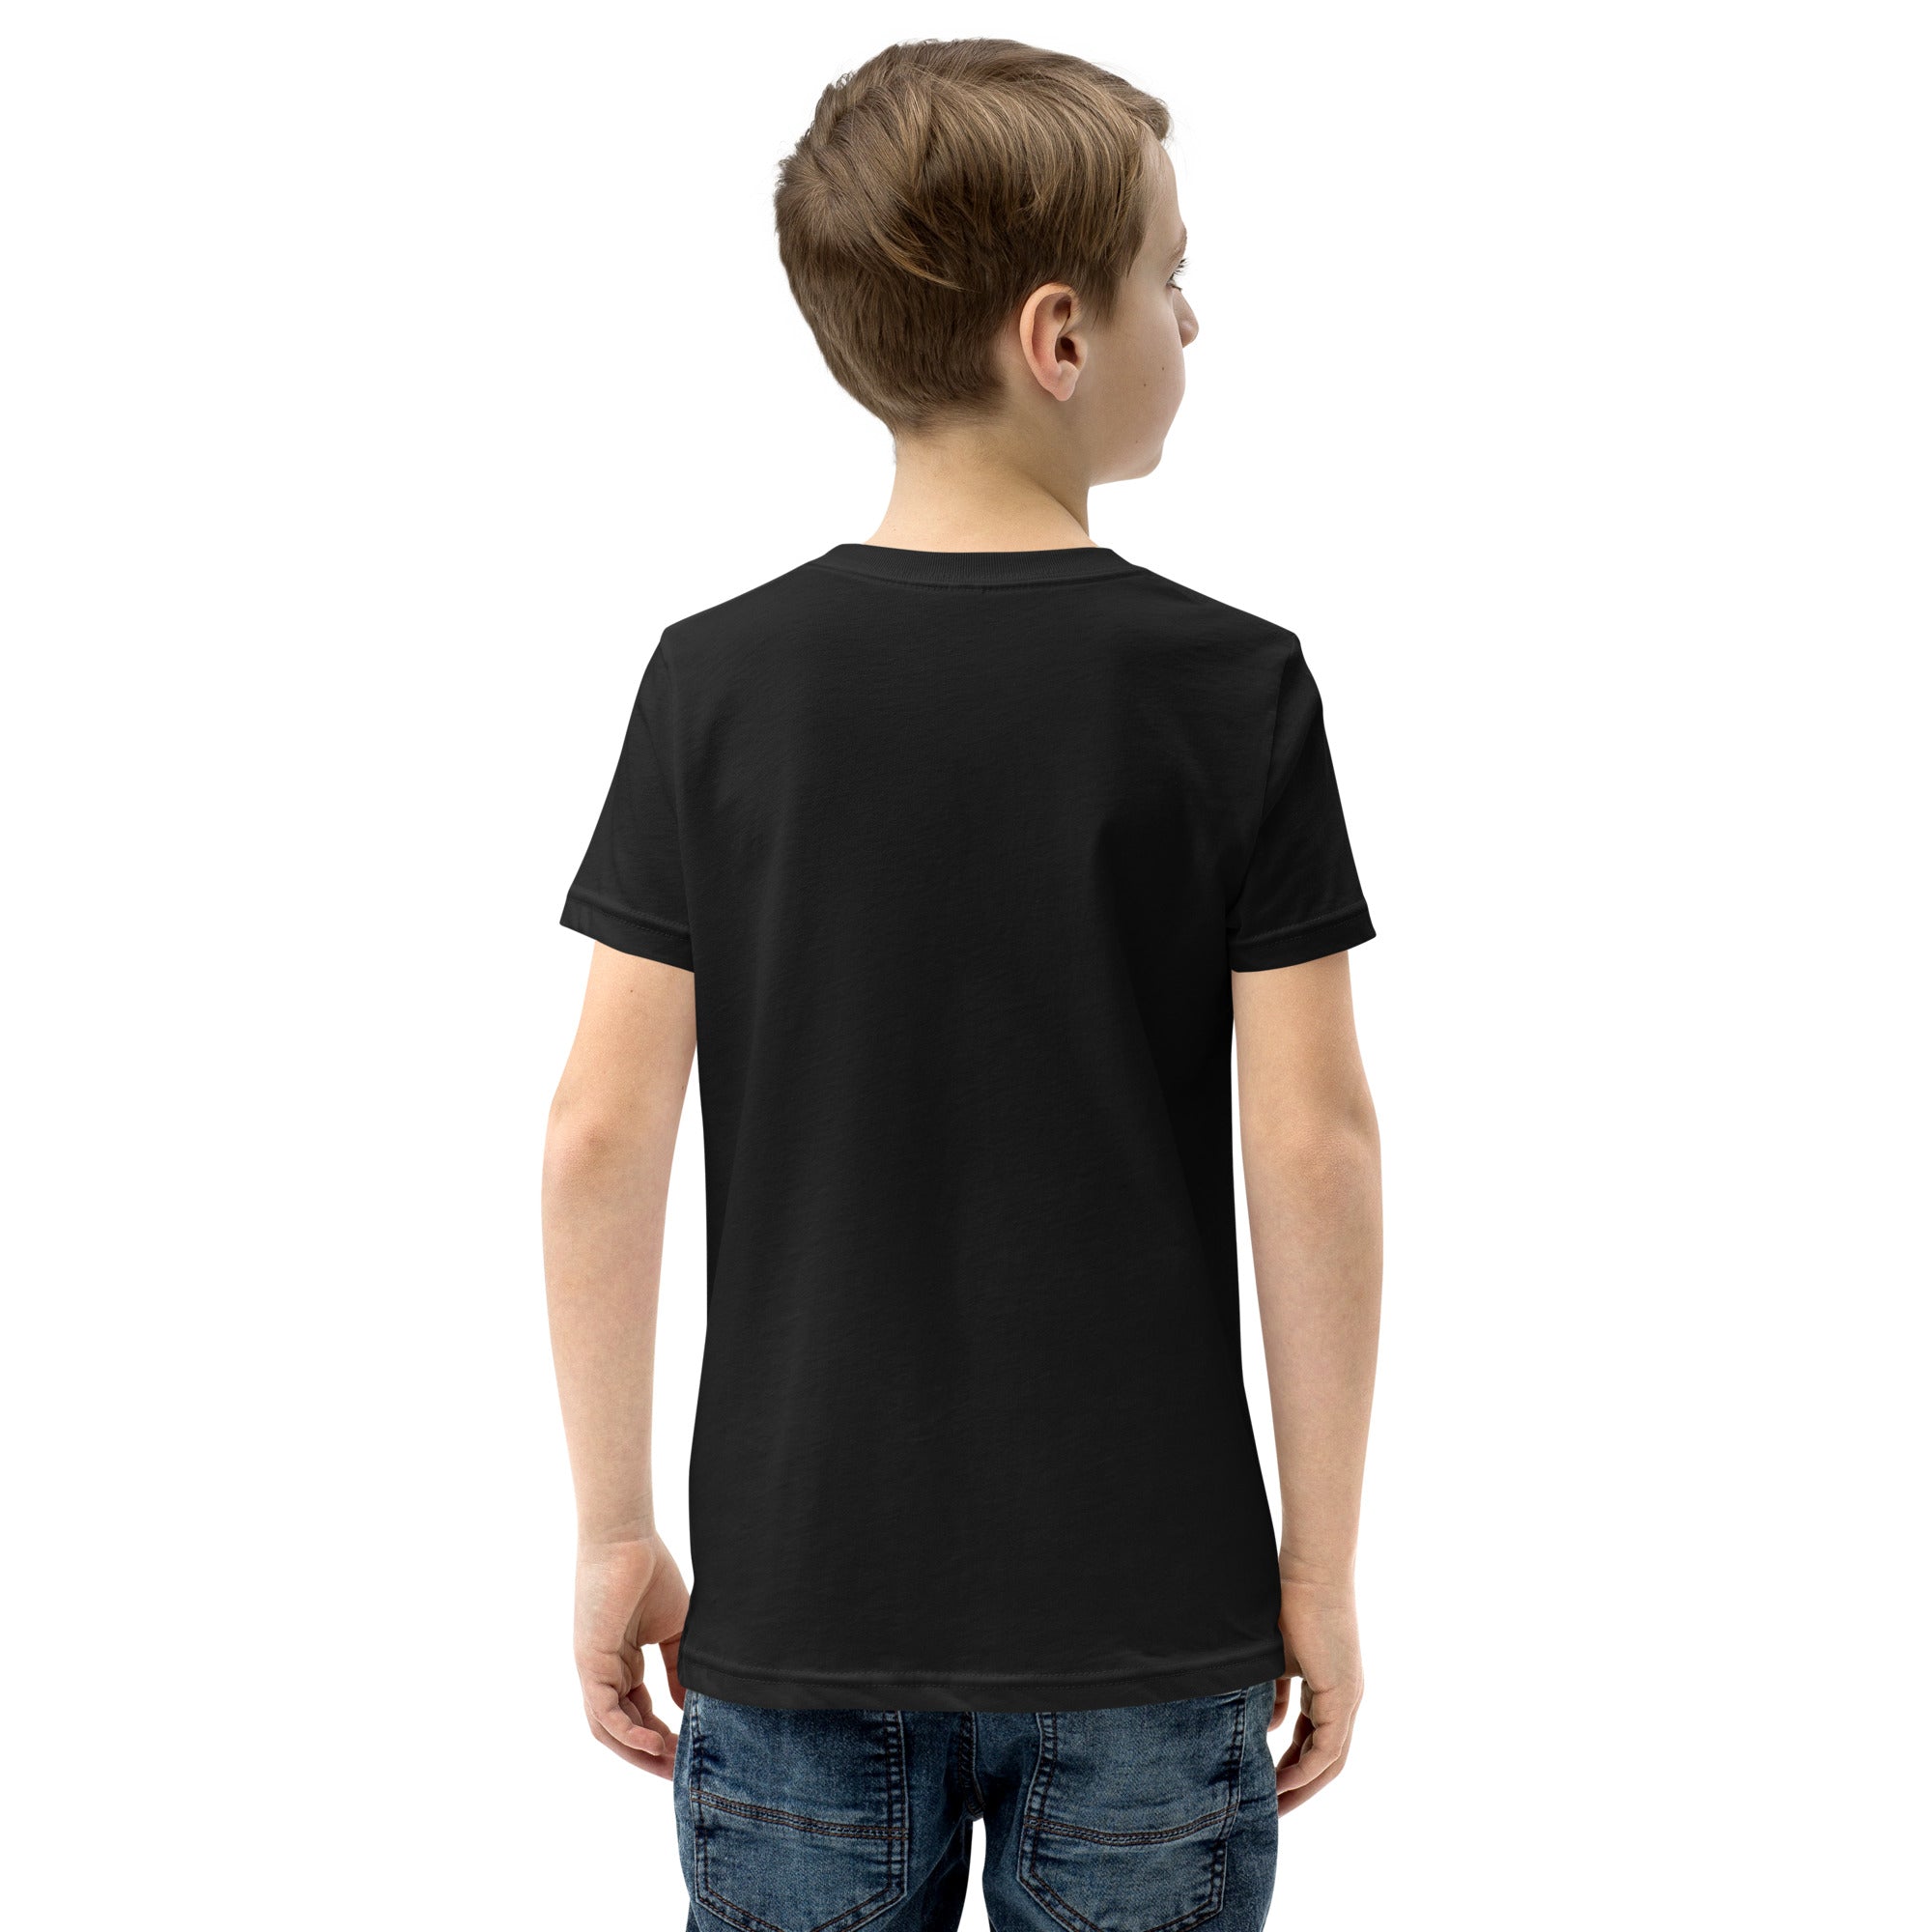 Roswell Logo R/W - Black Youth Short Sleeve T-Shirt